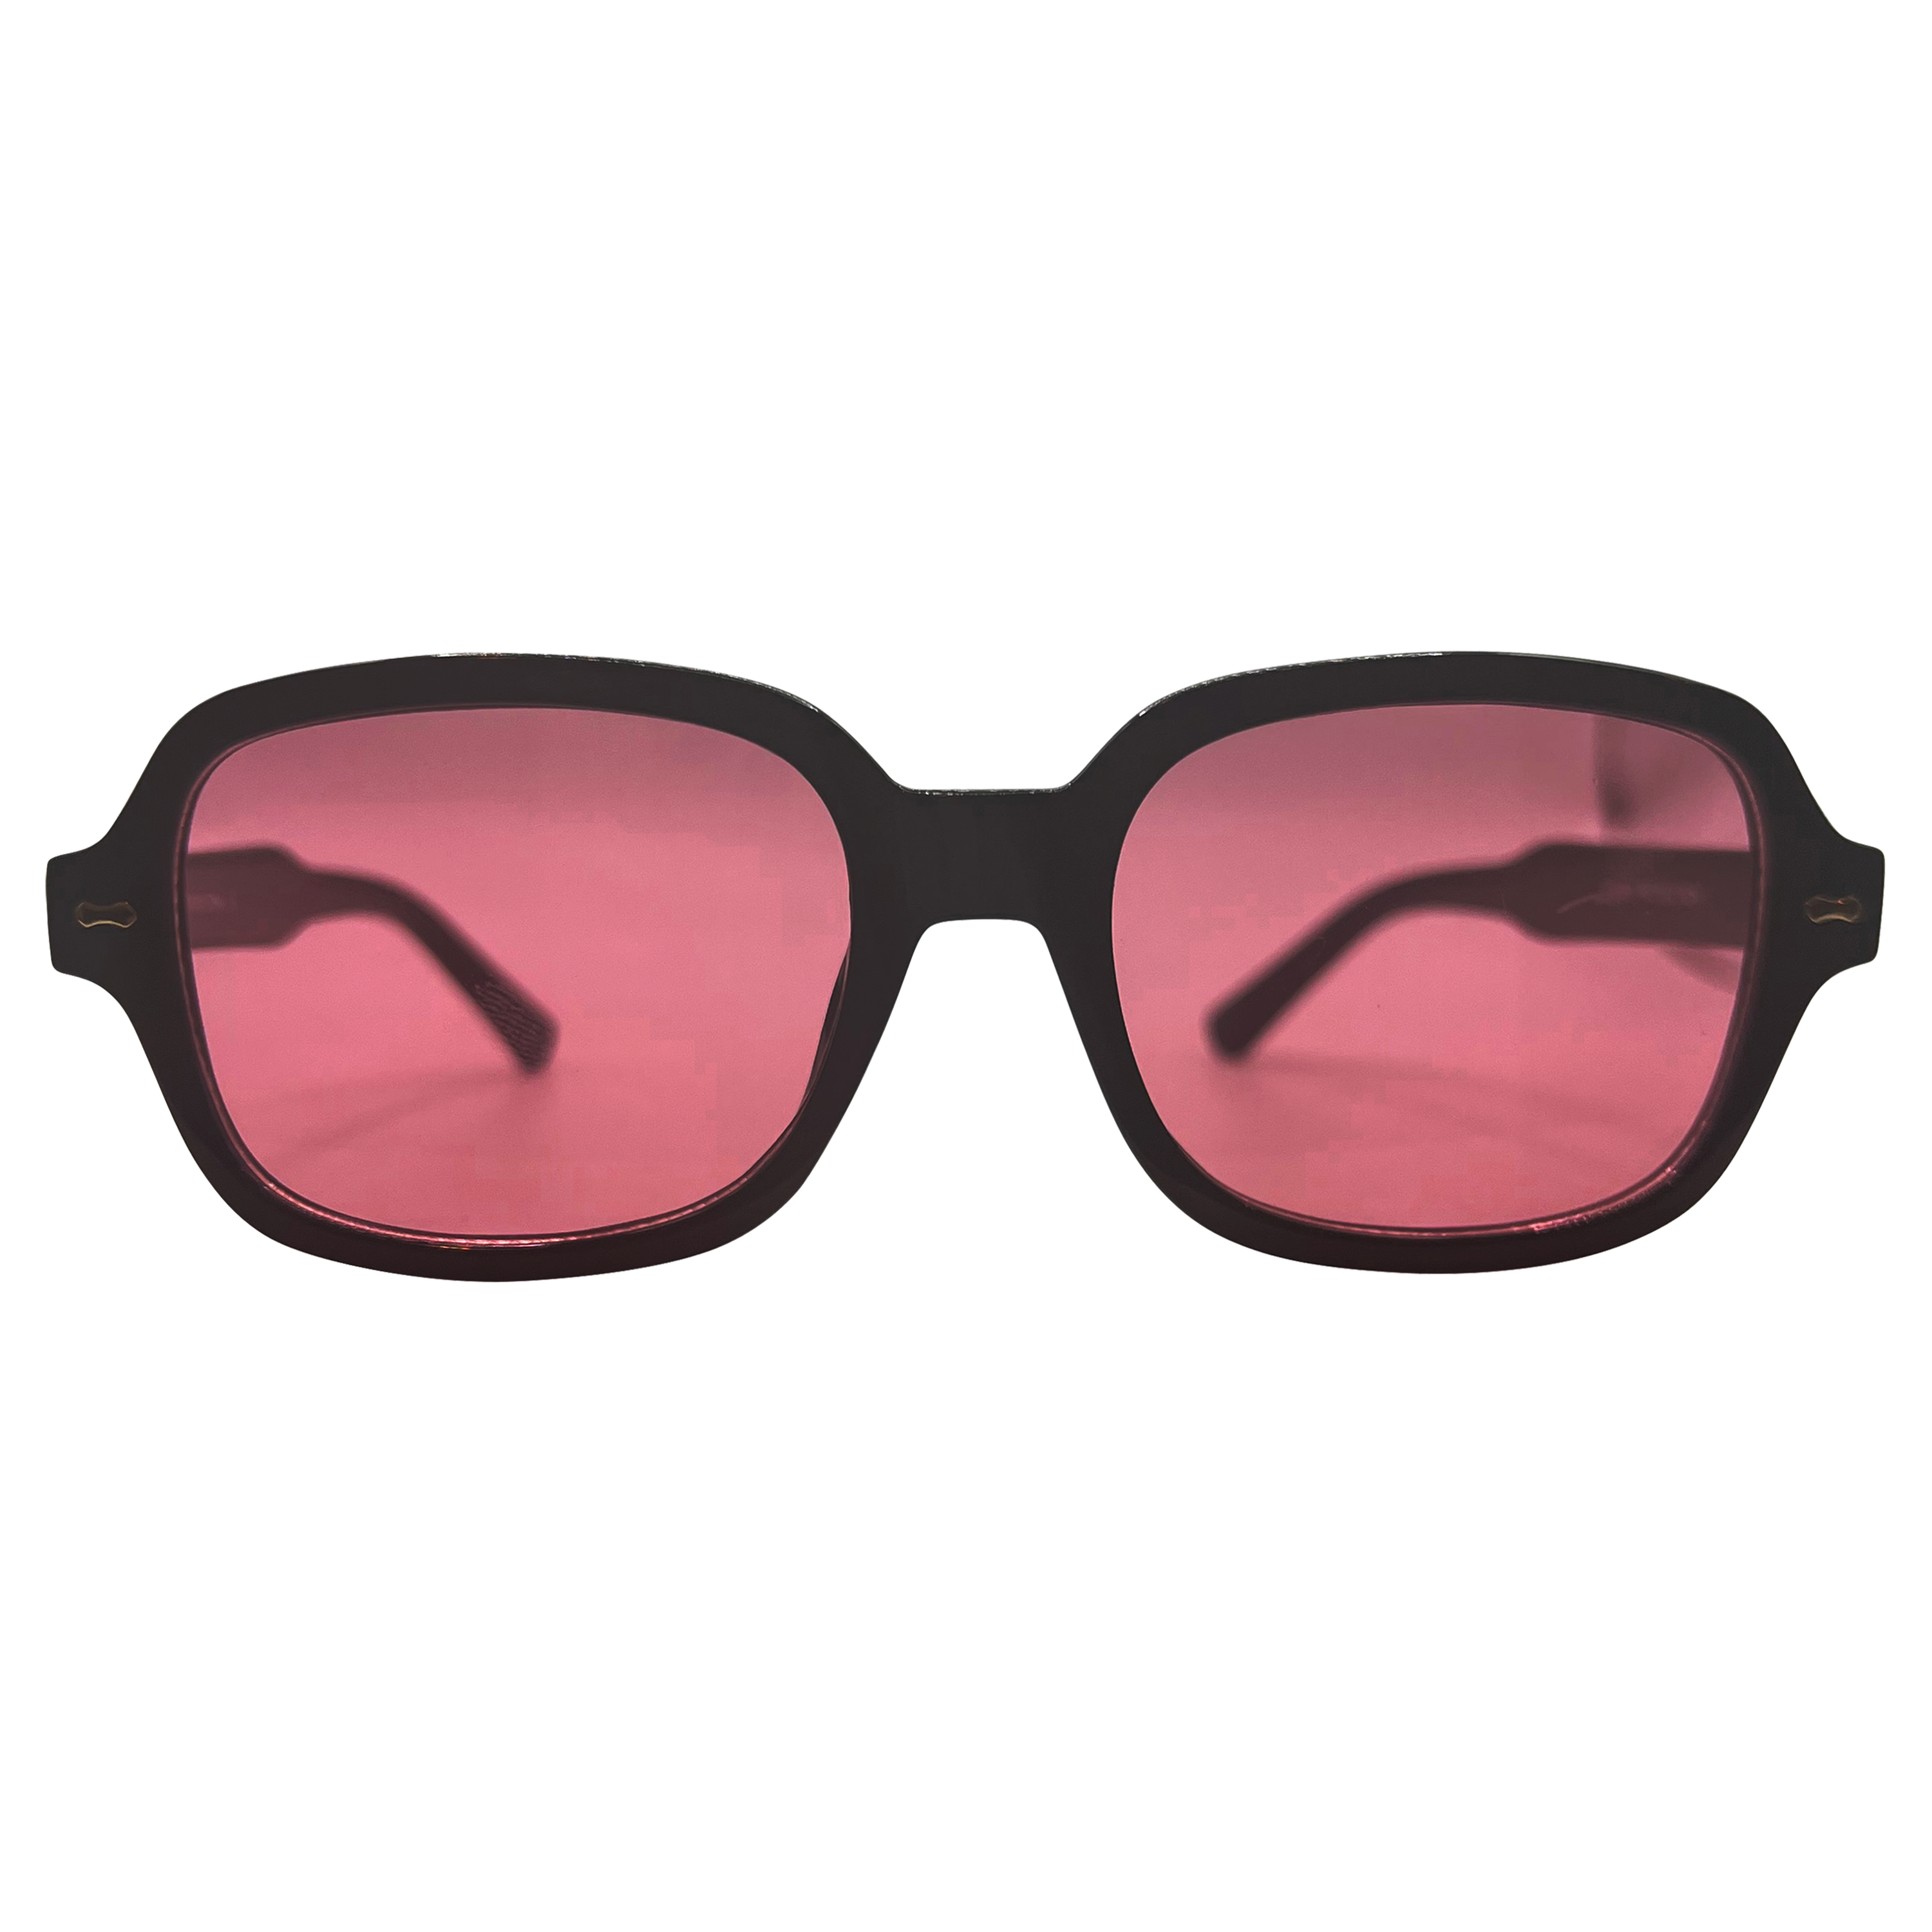 CANCELED Pink Sunglasses